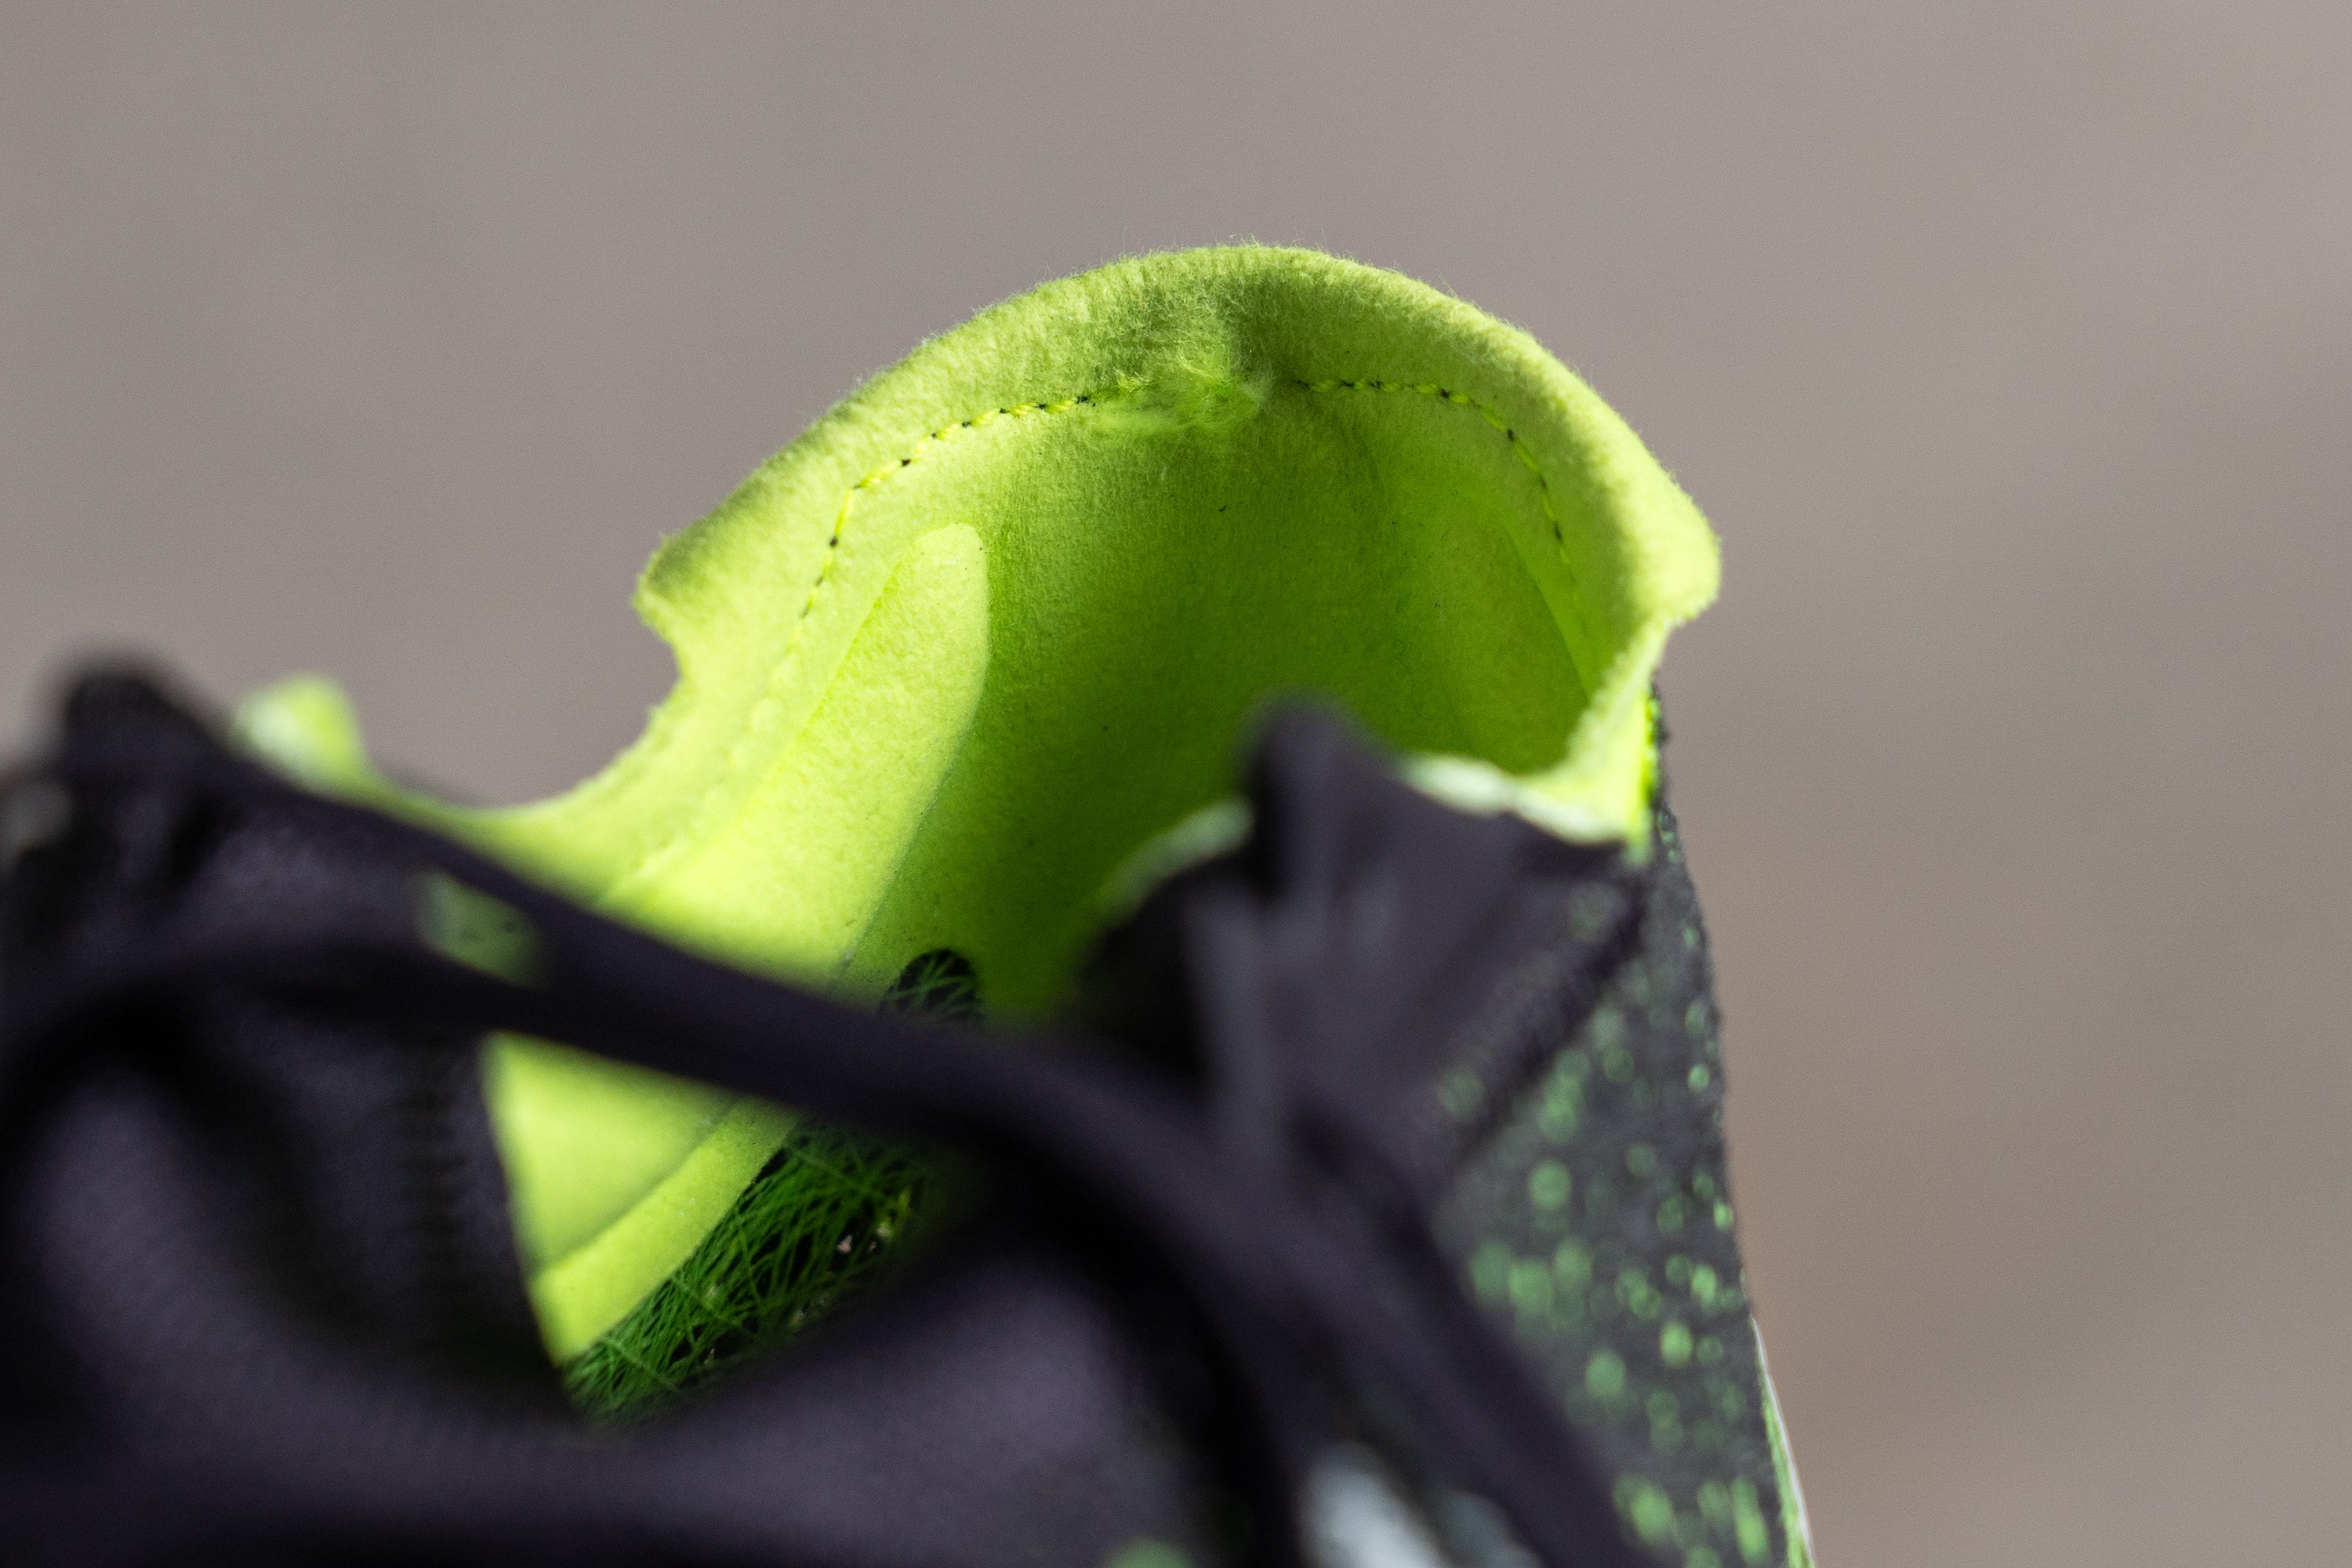 Adidas Hidden adidas ultra boost black solar orange Heel padding durability